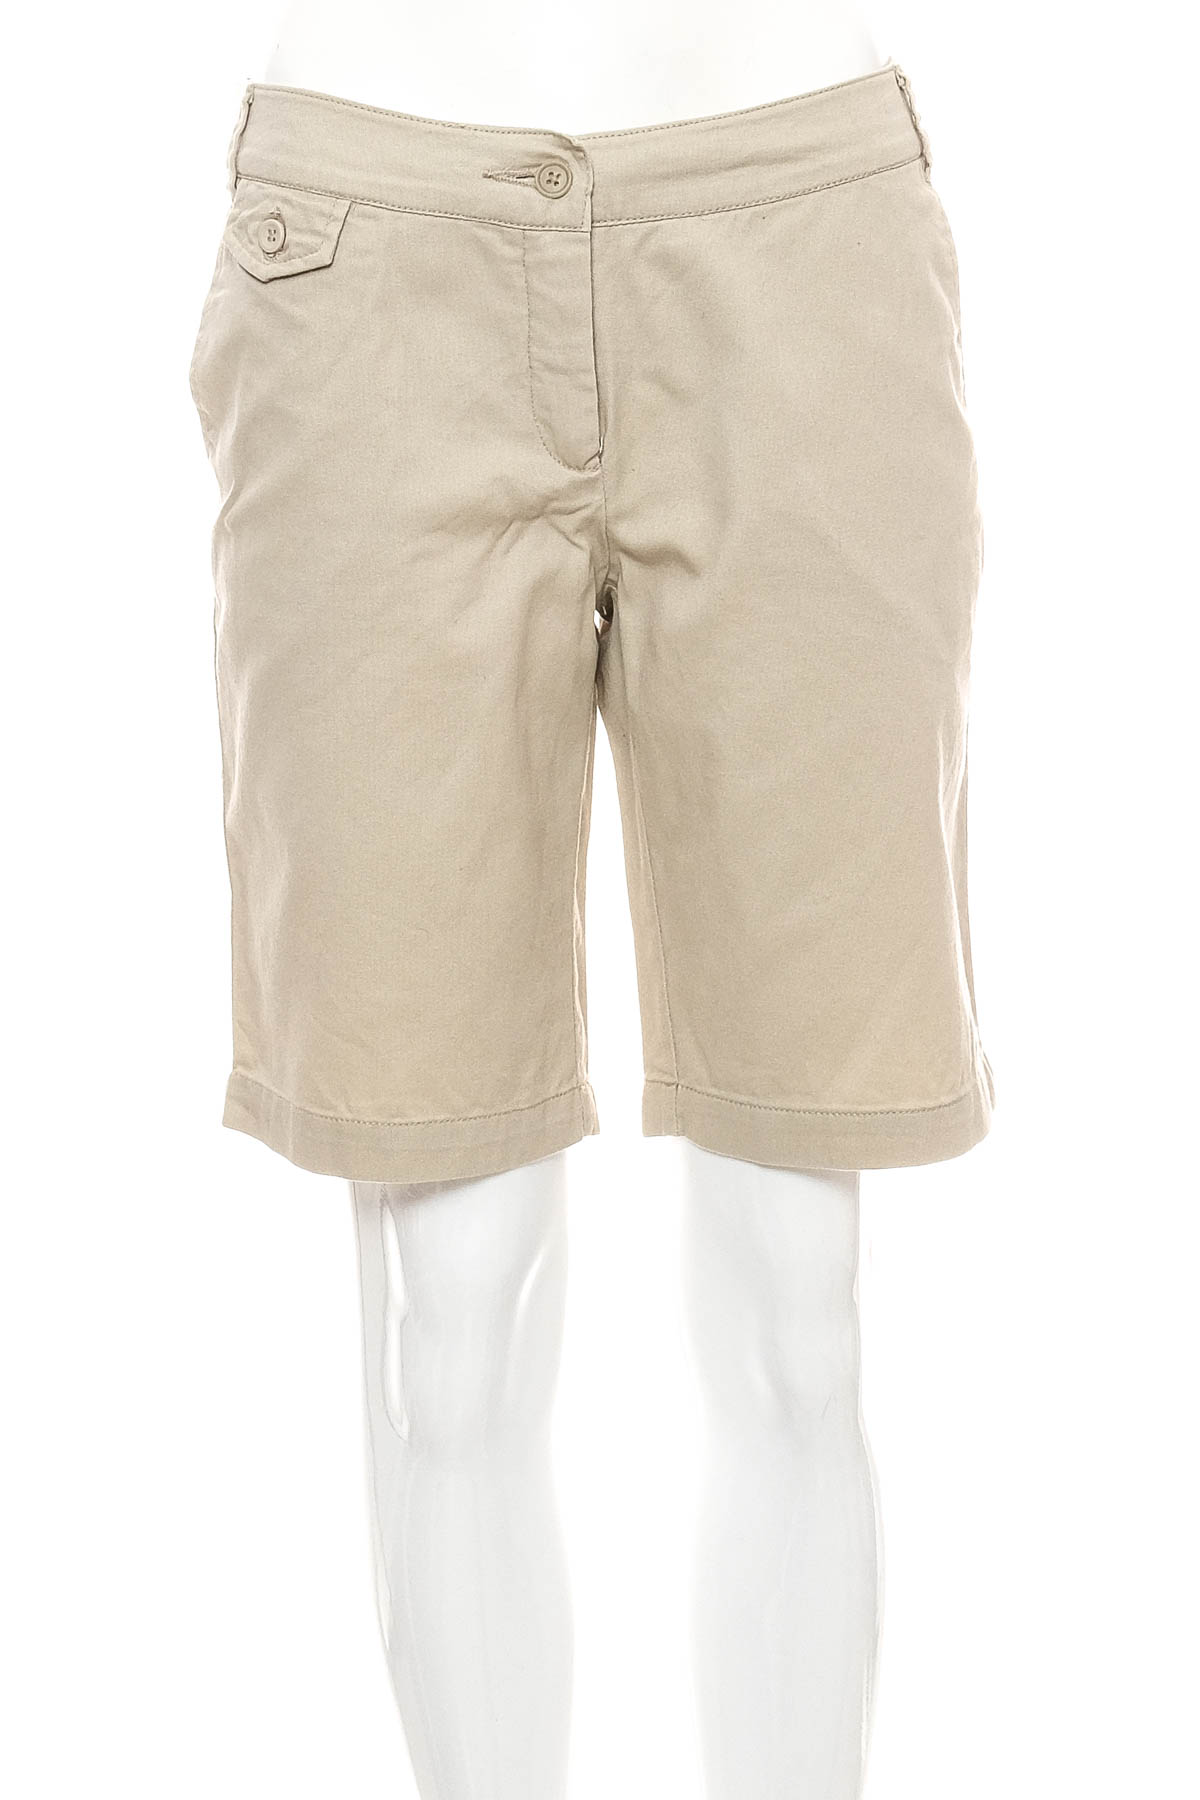 Female shorts - Colin's - 0